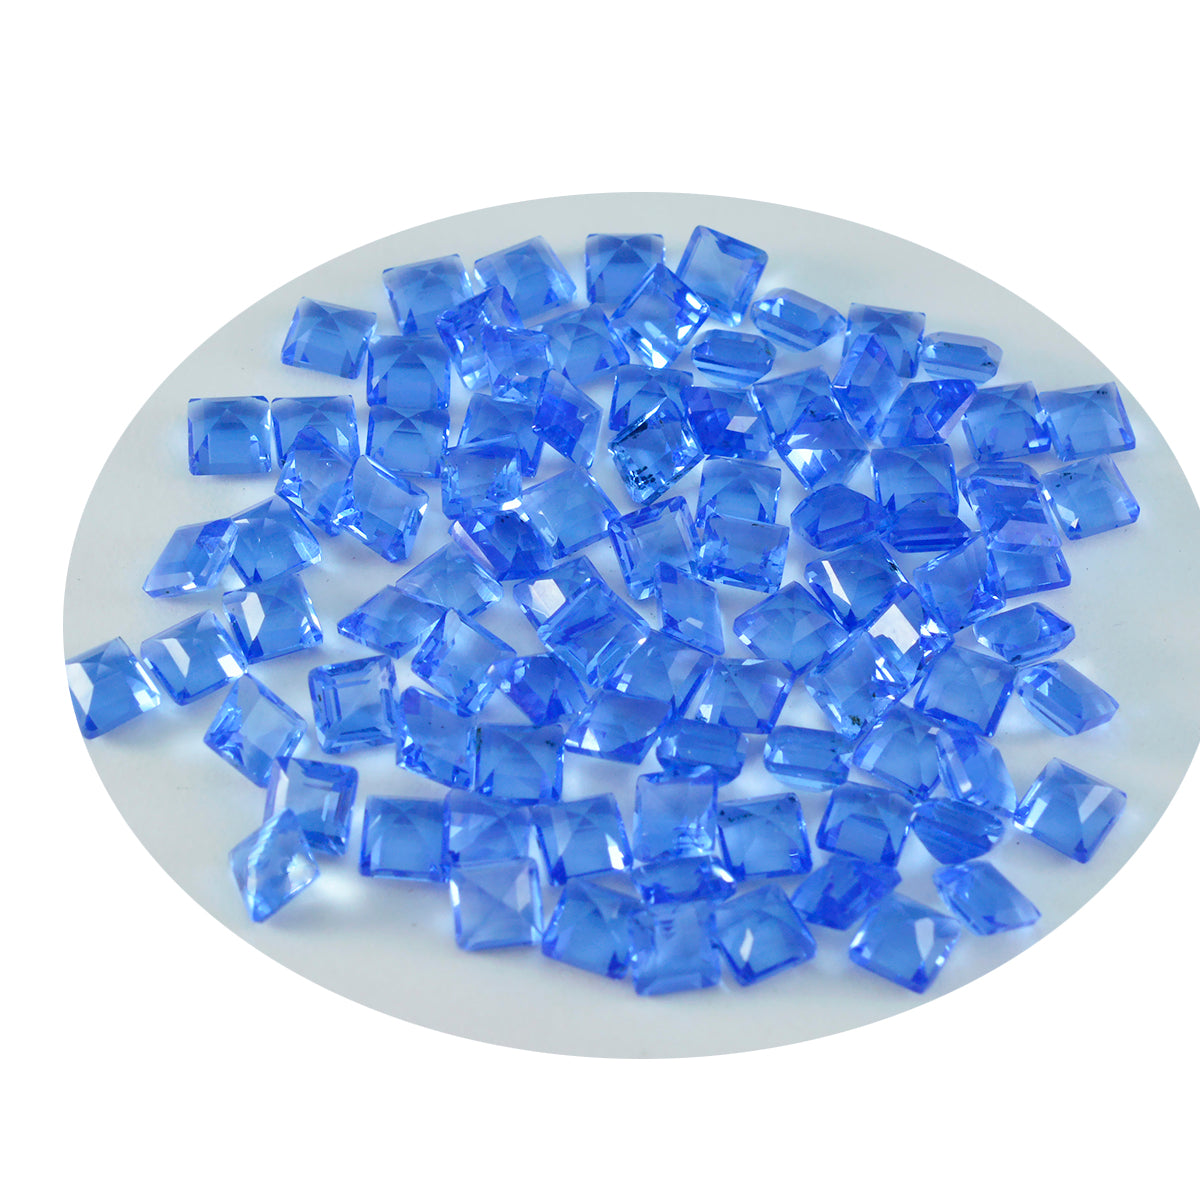 Riyogems 1PC Blauwe Saffier CZ Facet 3x3 mm Vierkante Vorm A+1 Kwaliteit Losse Edelstenen